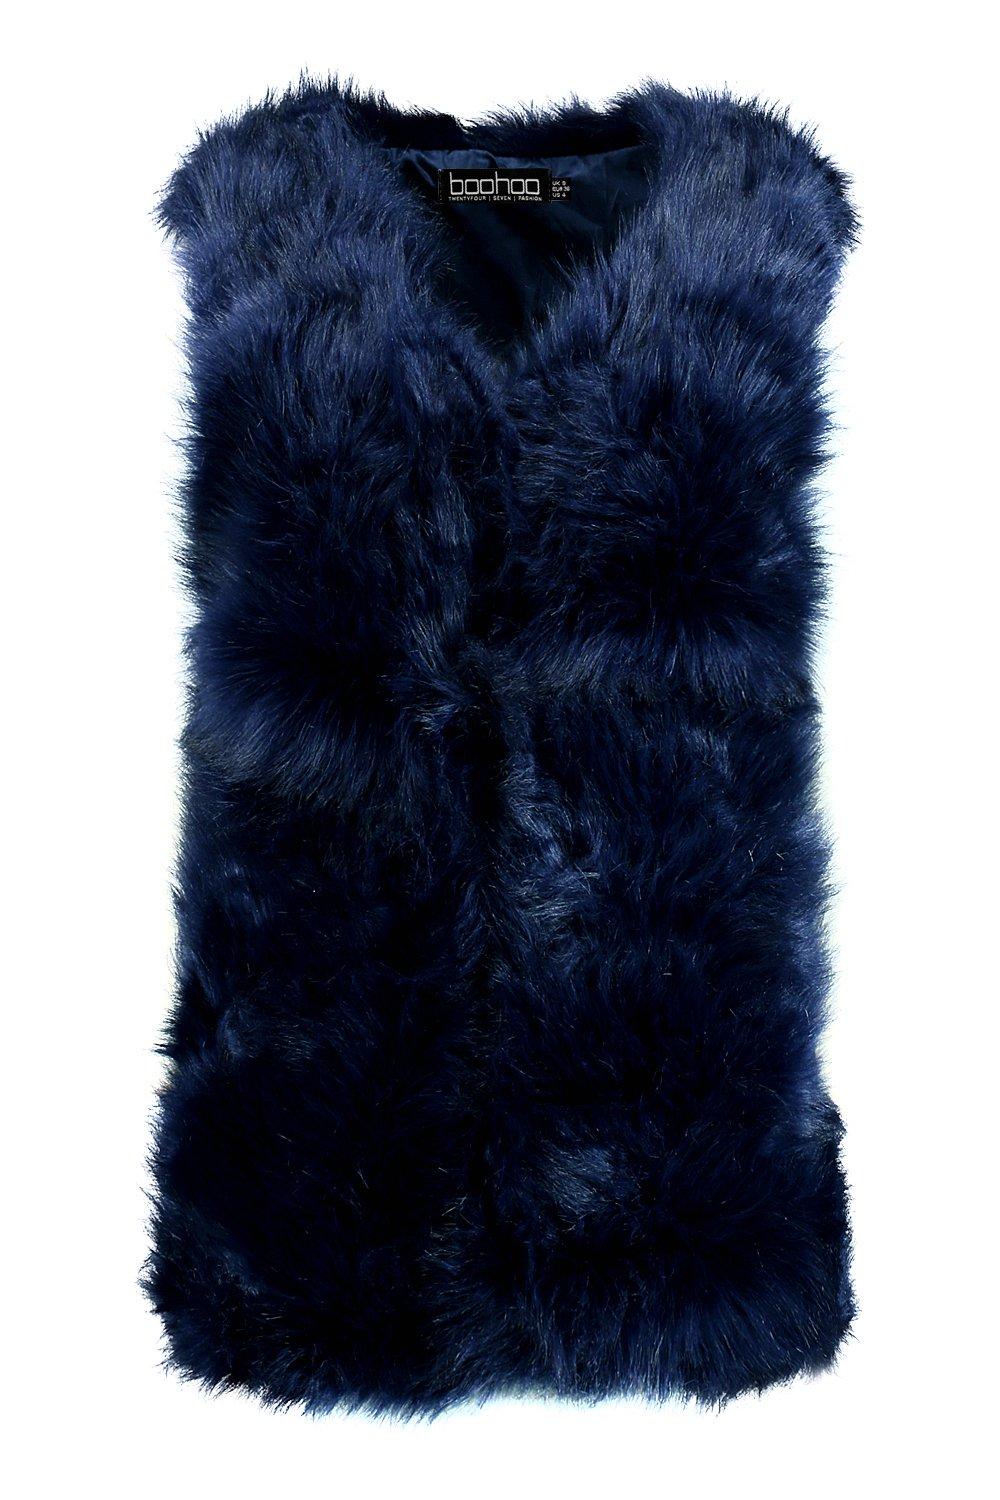 NEW Boohoo Womens Emma Faux Fur Gilet in Acrylic 65% Polyester | eBay